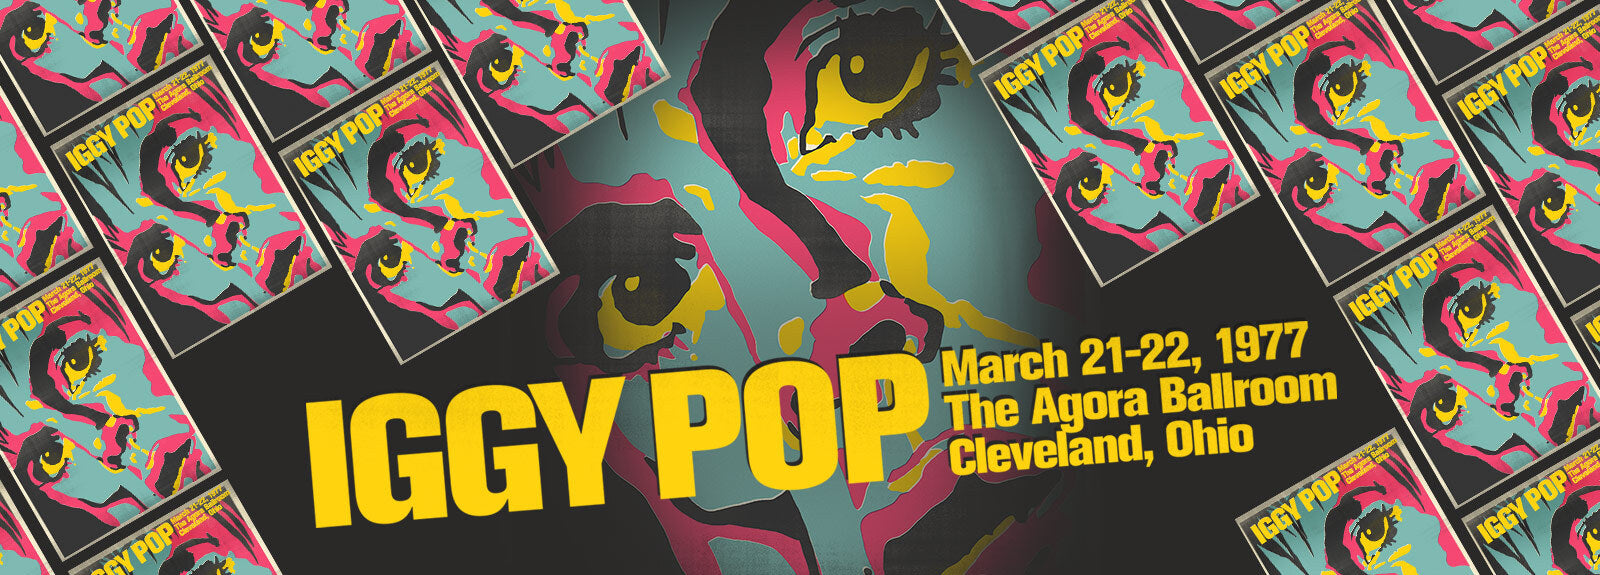 Behind The Poster: Iggy Pop Agora Ballroom 1977